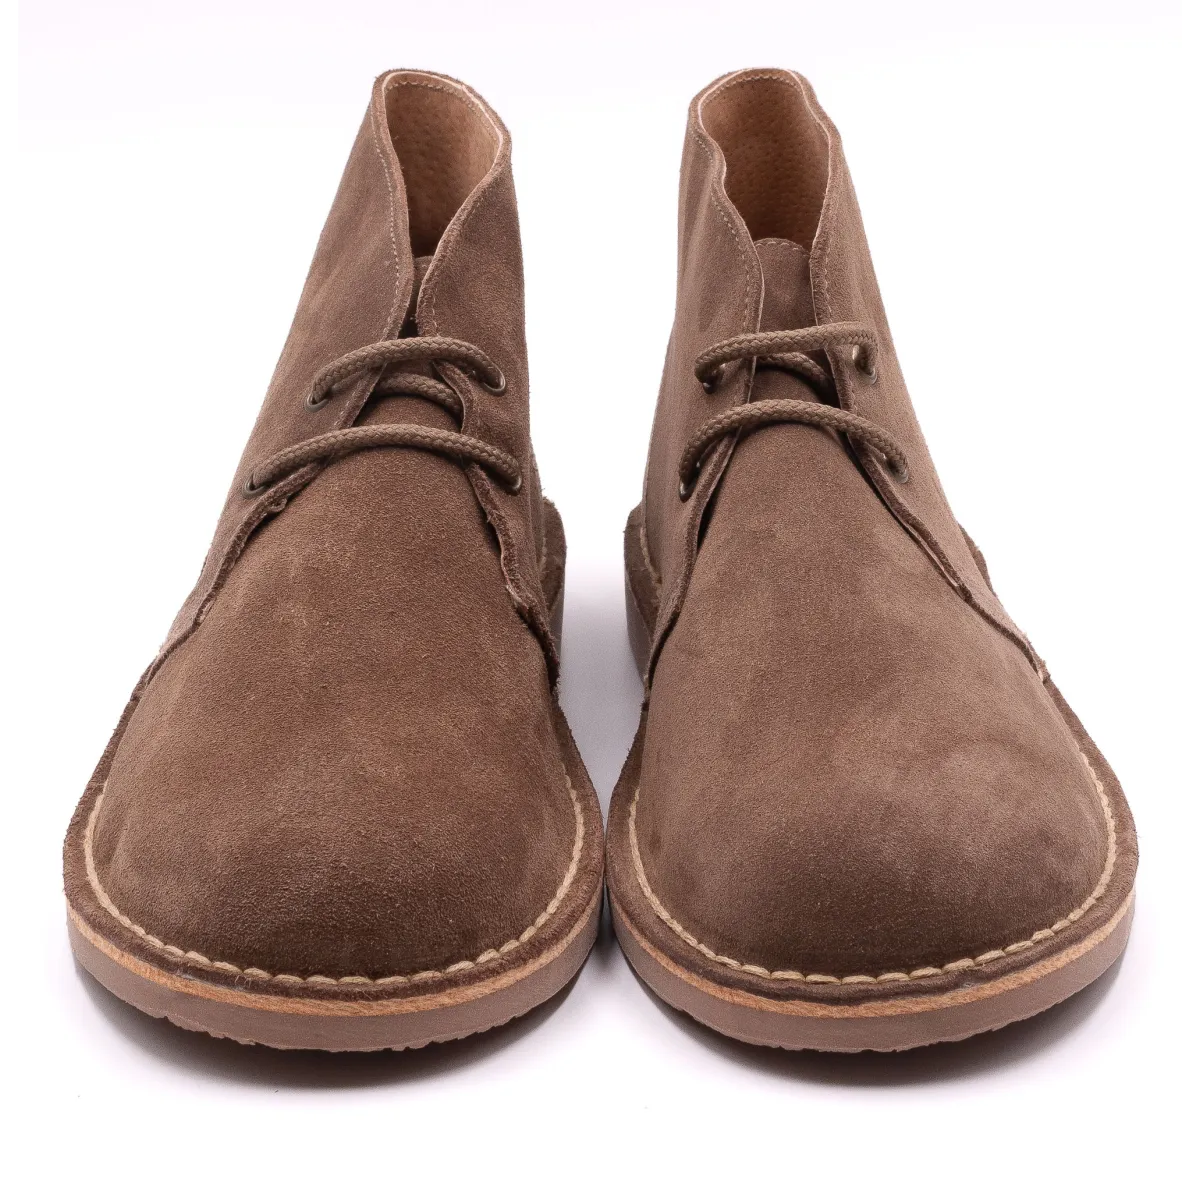 Boni Amaury - desert boots en daim gris